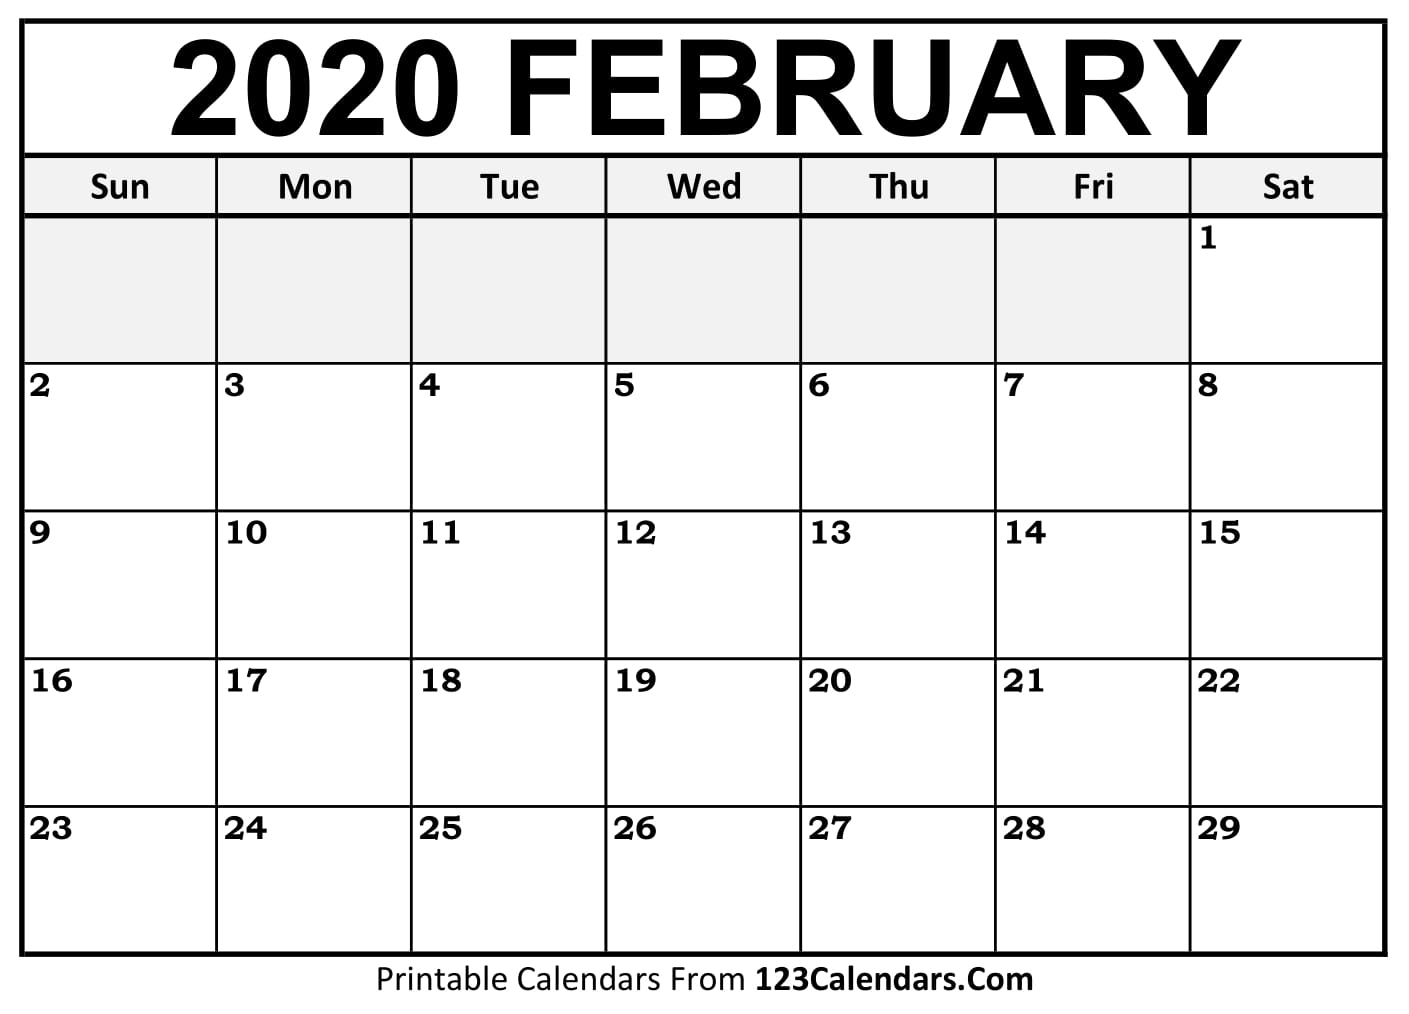 February 2020 Printable Calendar | 123Calendars throughout 123 Calendar January 2020